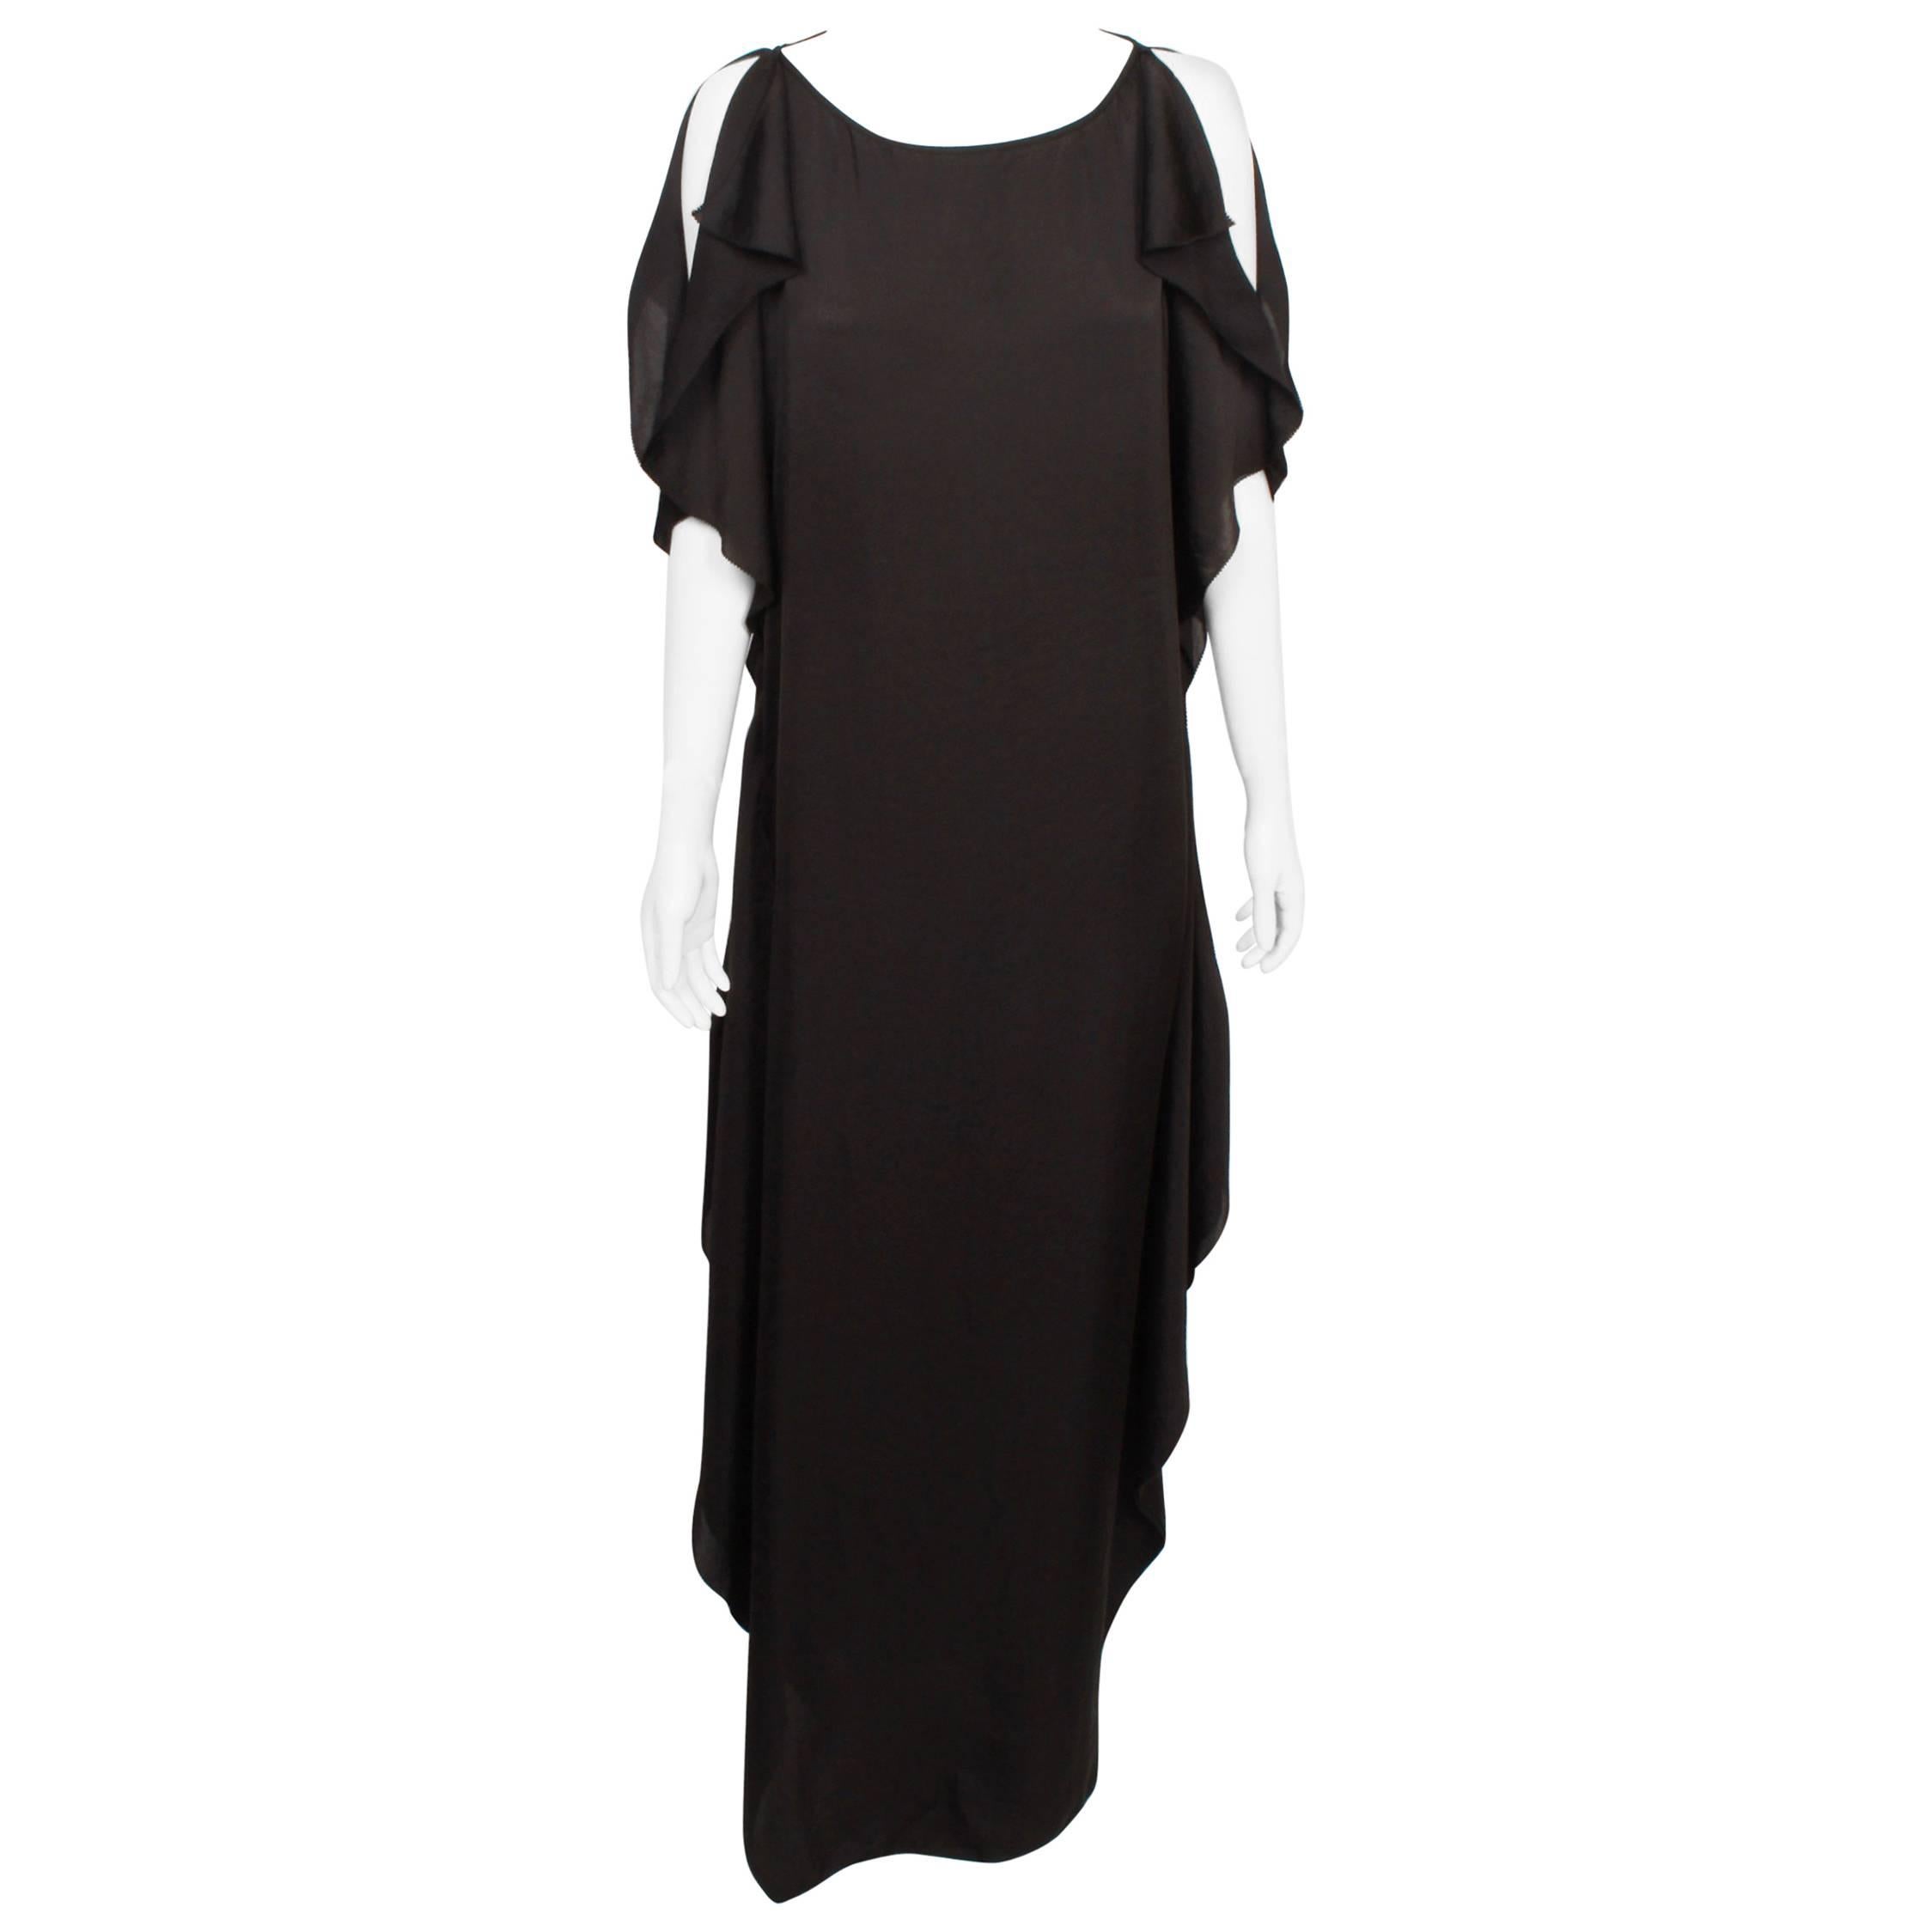 Max Azria Black Silk Backless Caftan Dress